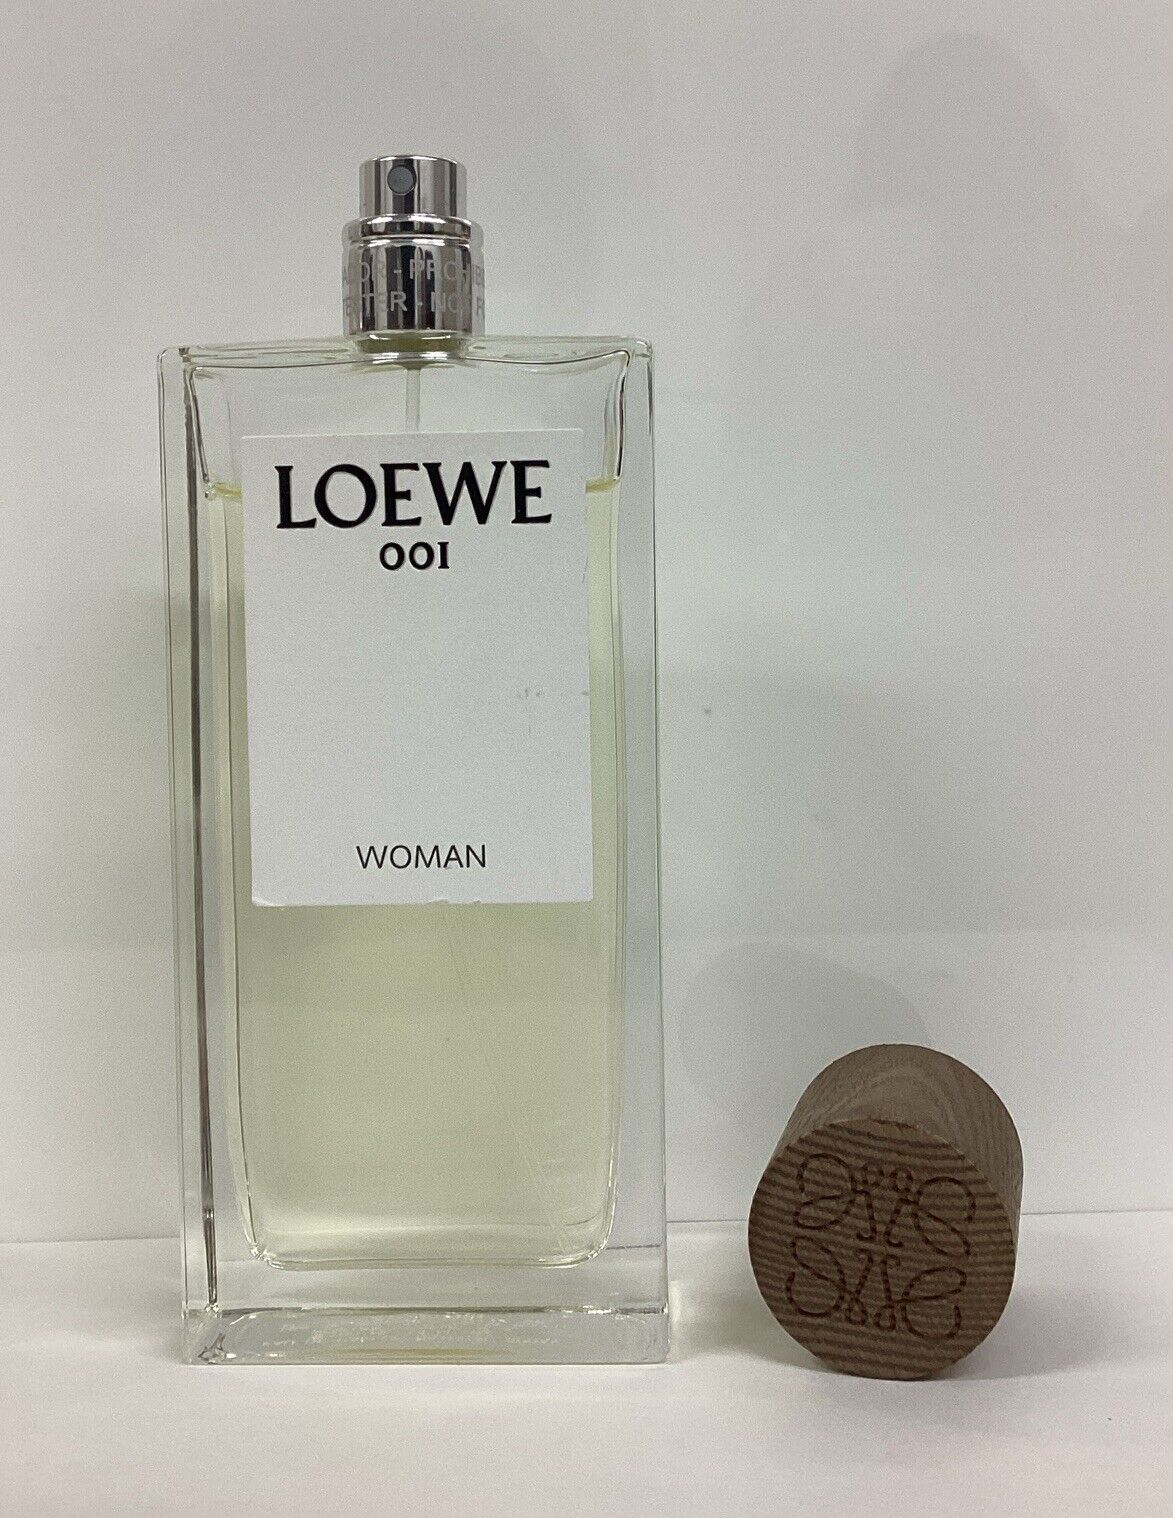 Loewe 001 Woman Eau De Parfum 3.4oz Spray As Pict, 90%FULL NO BOX TESTER